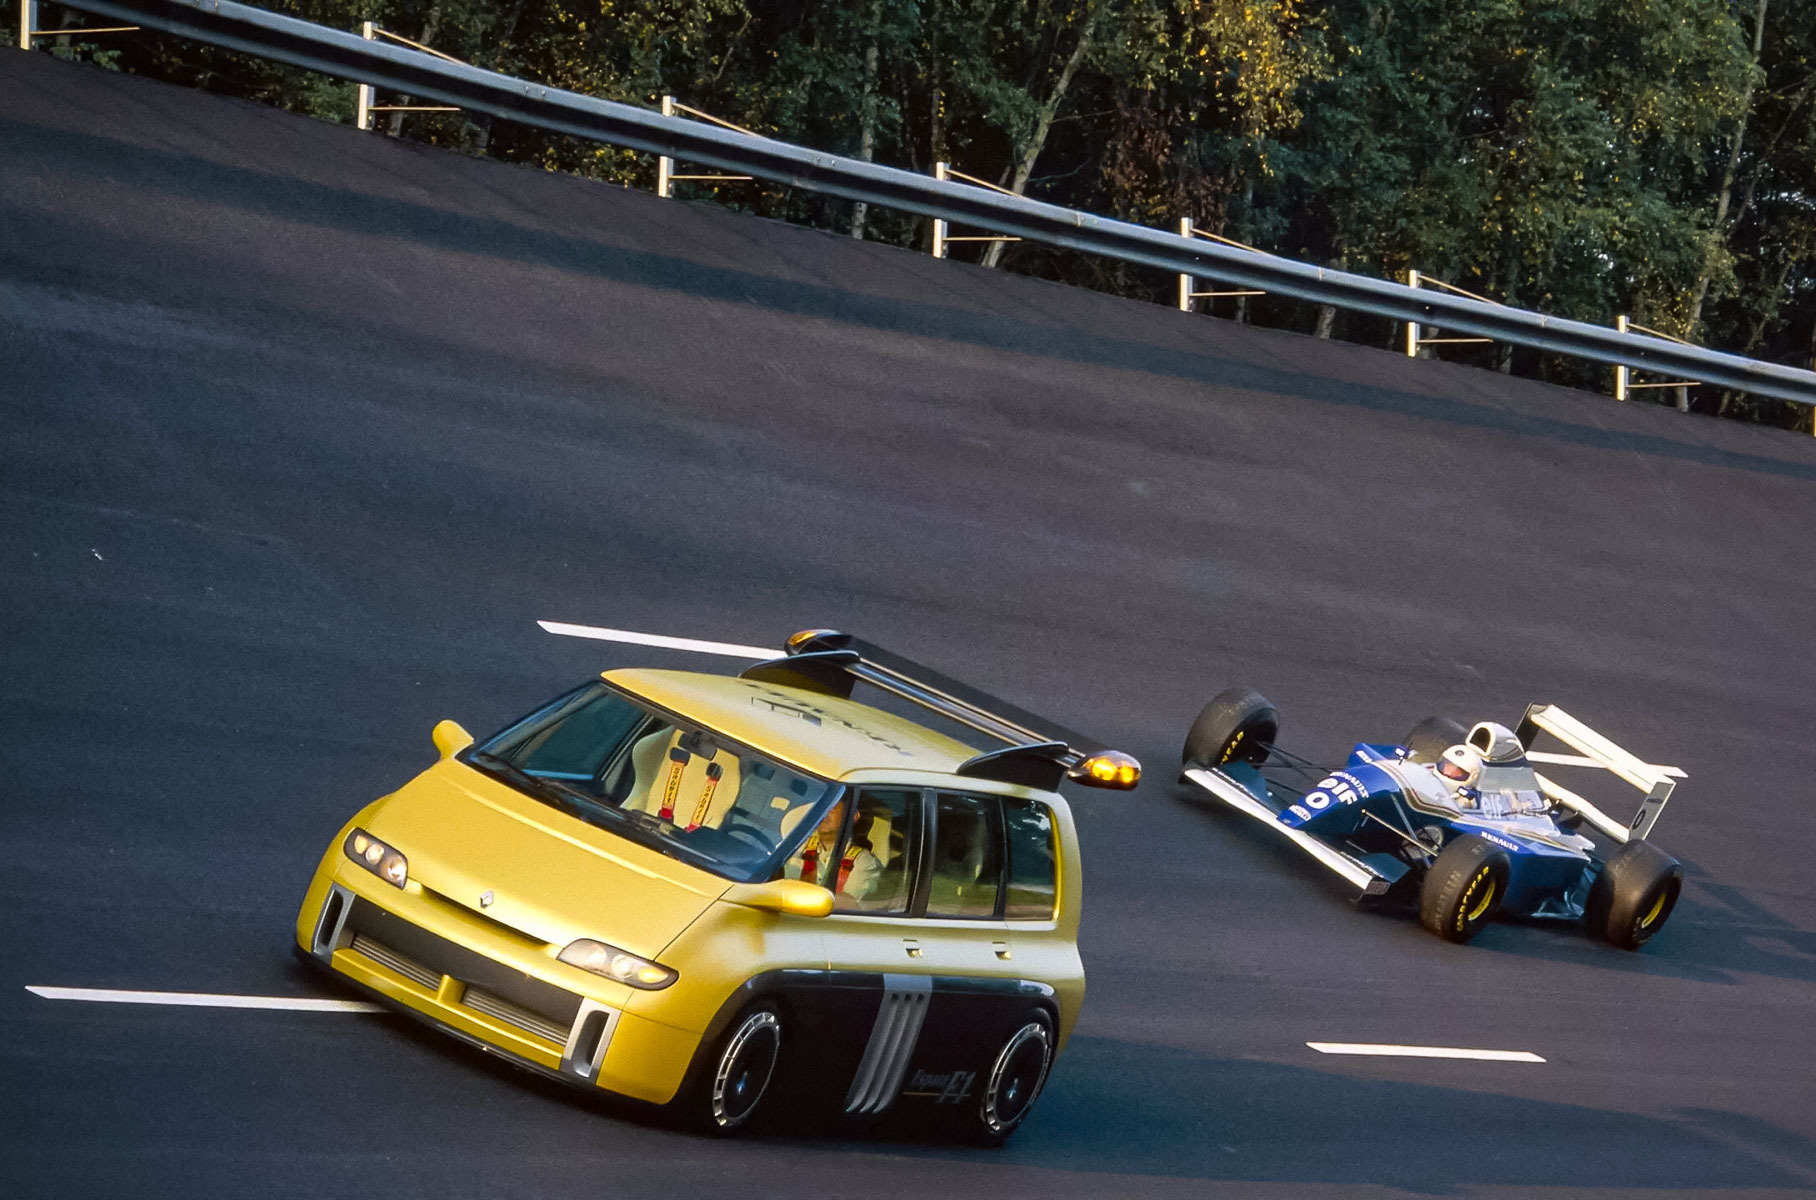 Renault Espace F1